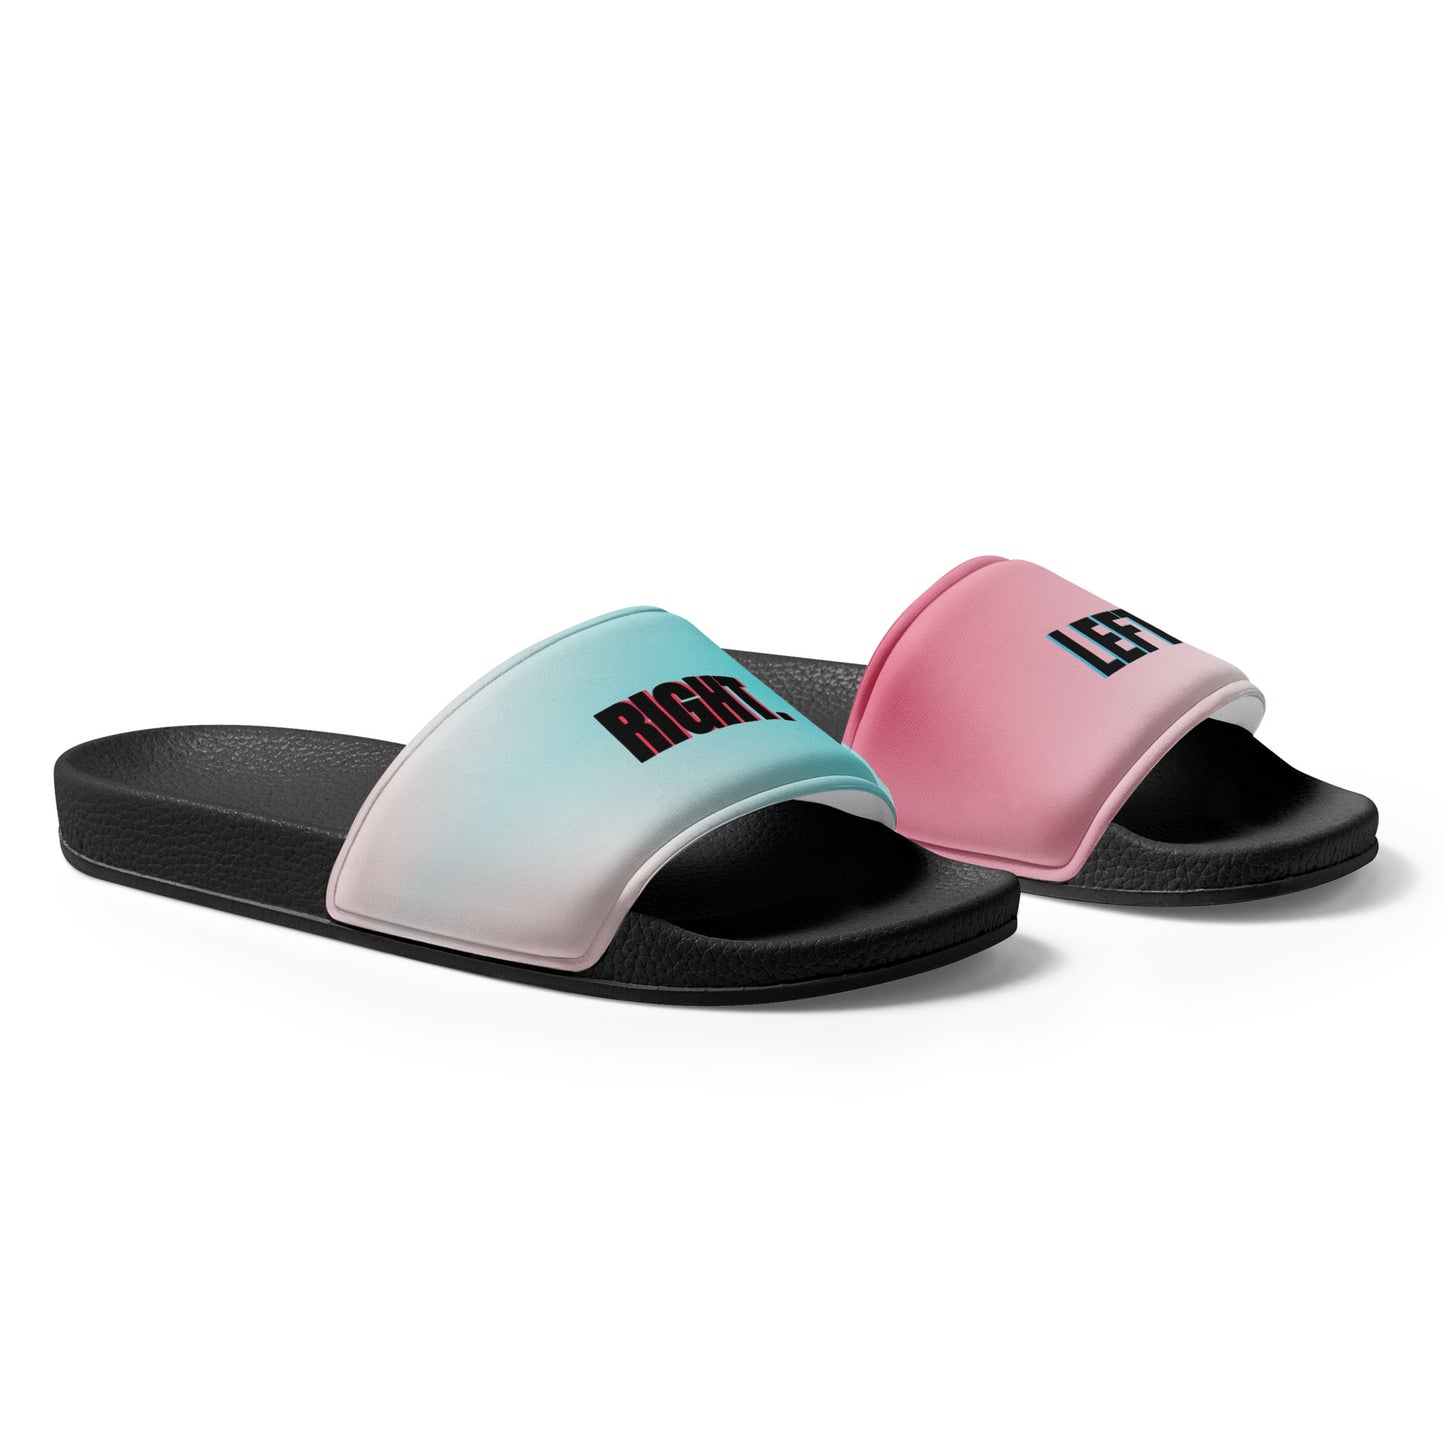 #bluecatmax Women's Slides Comfortable Contoured Footbed 7-11.5